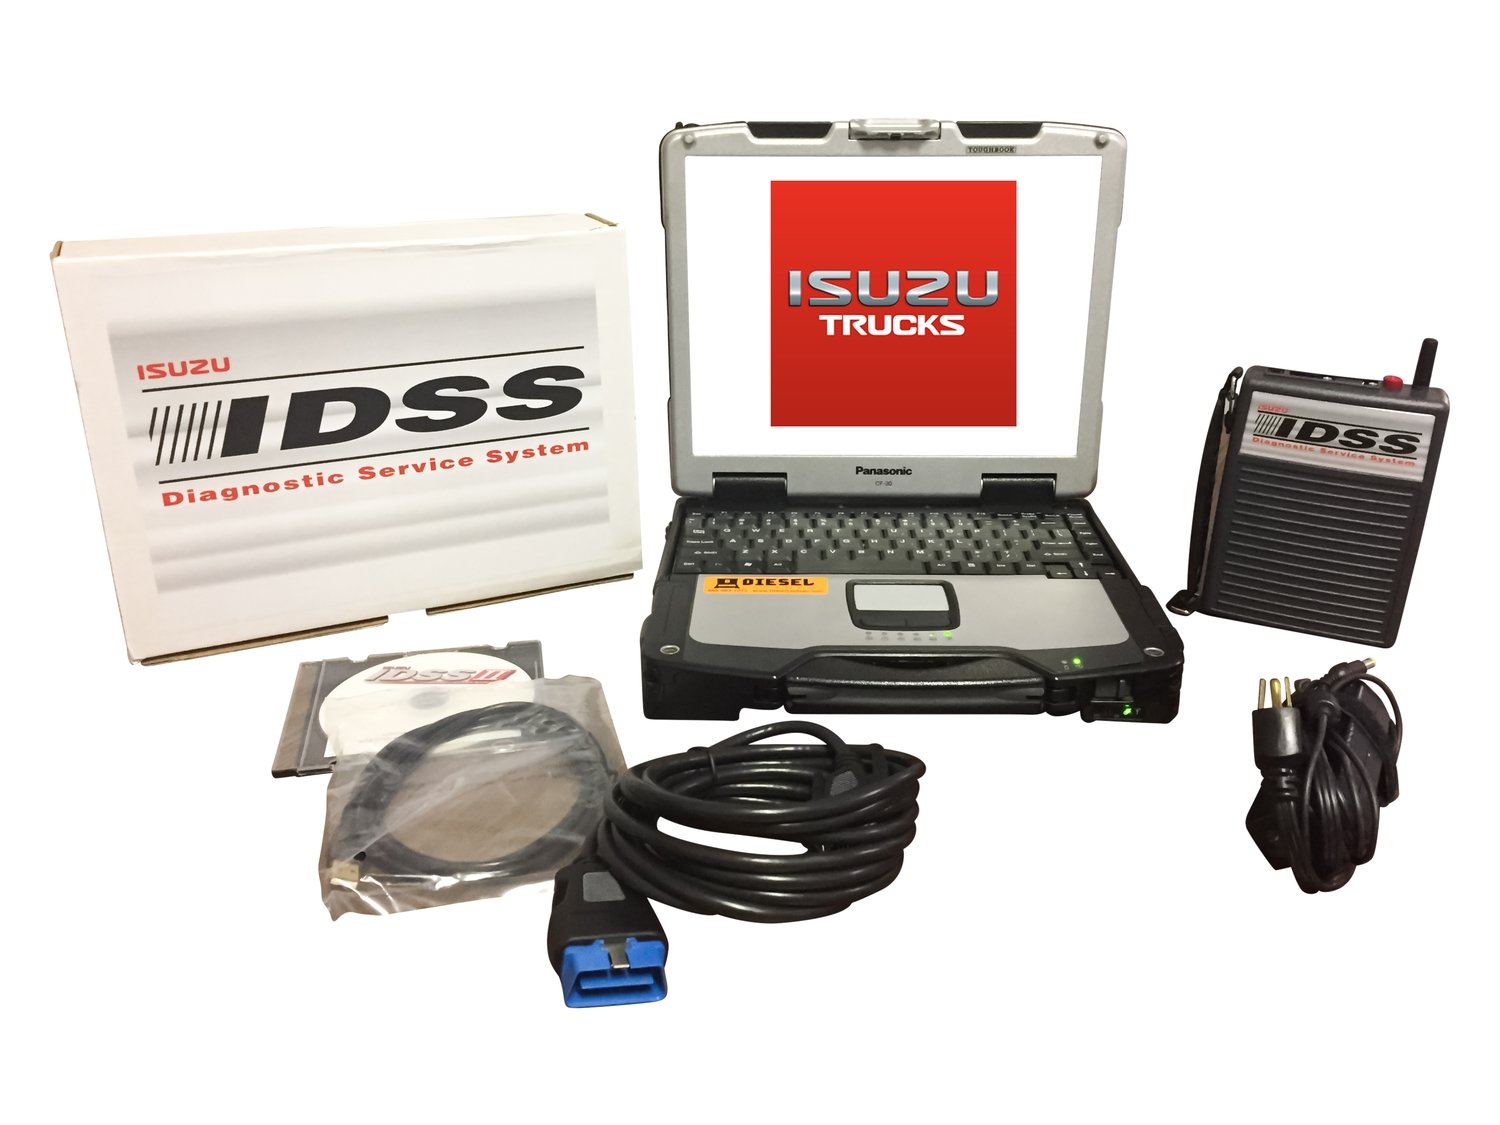 isuzu diagnostic service system idss support